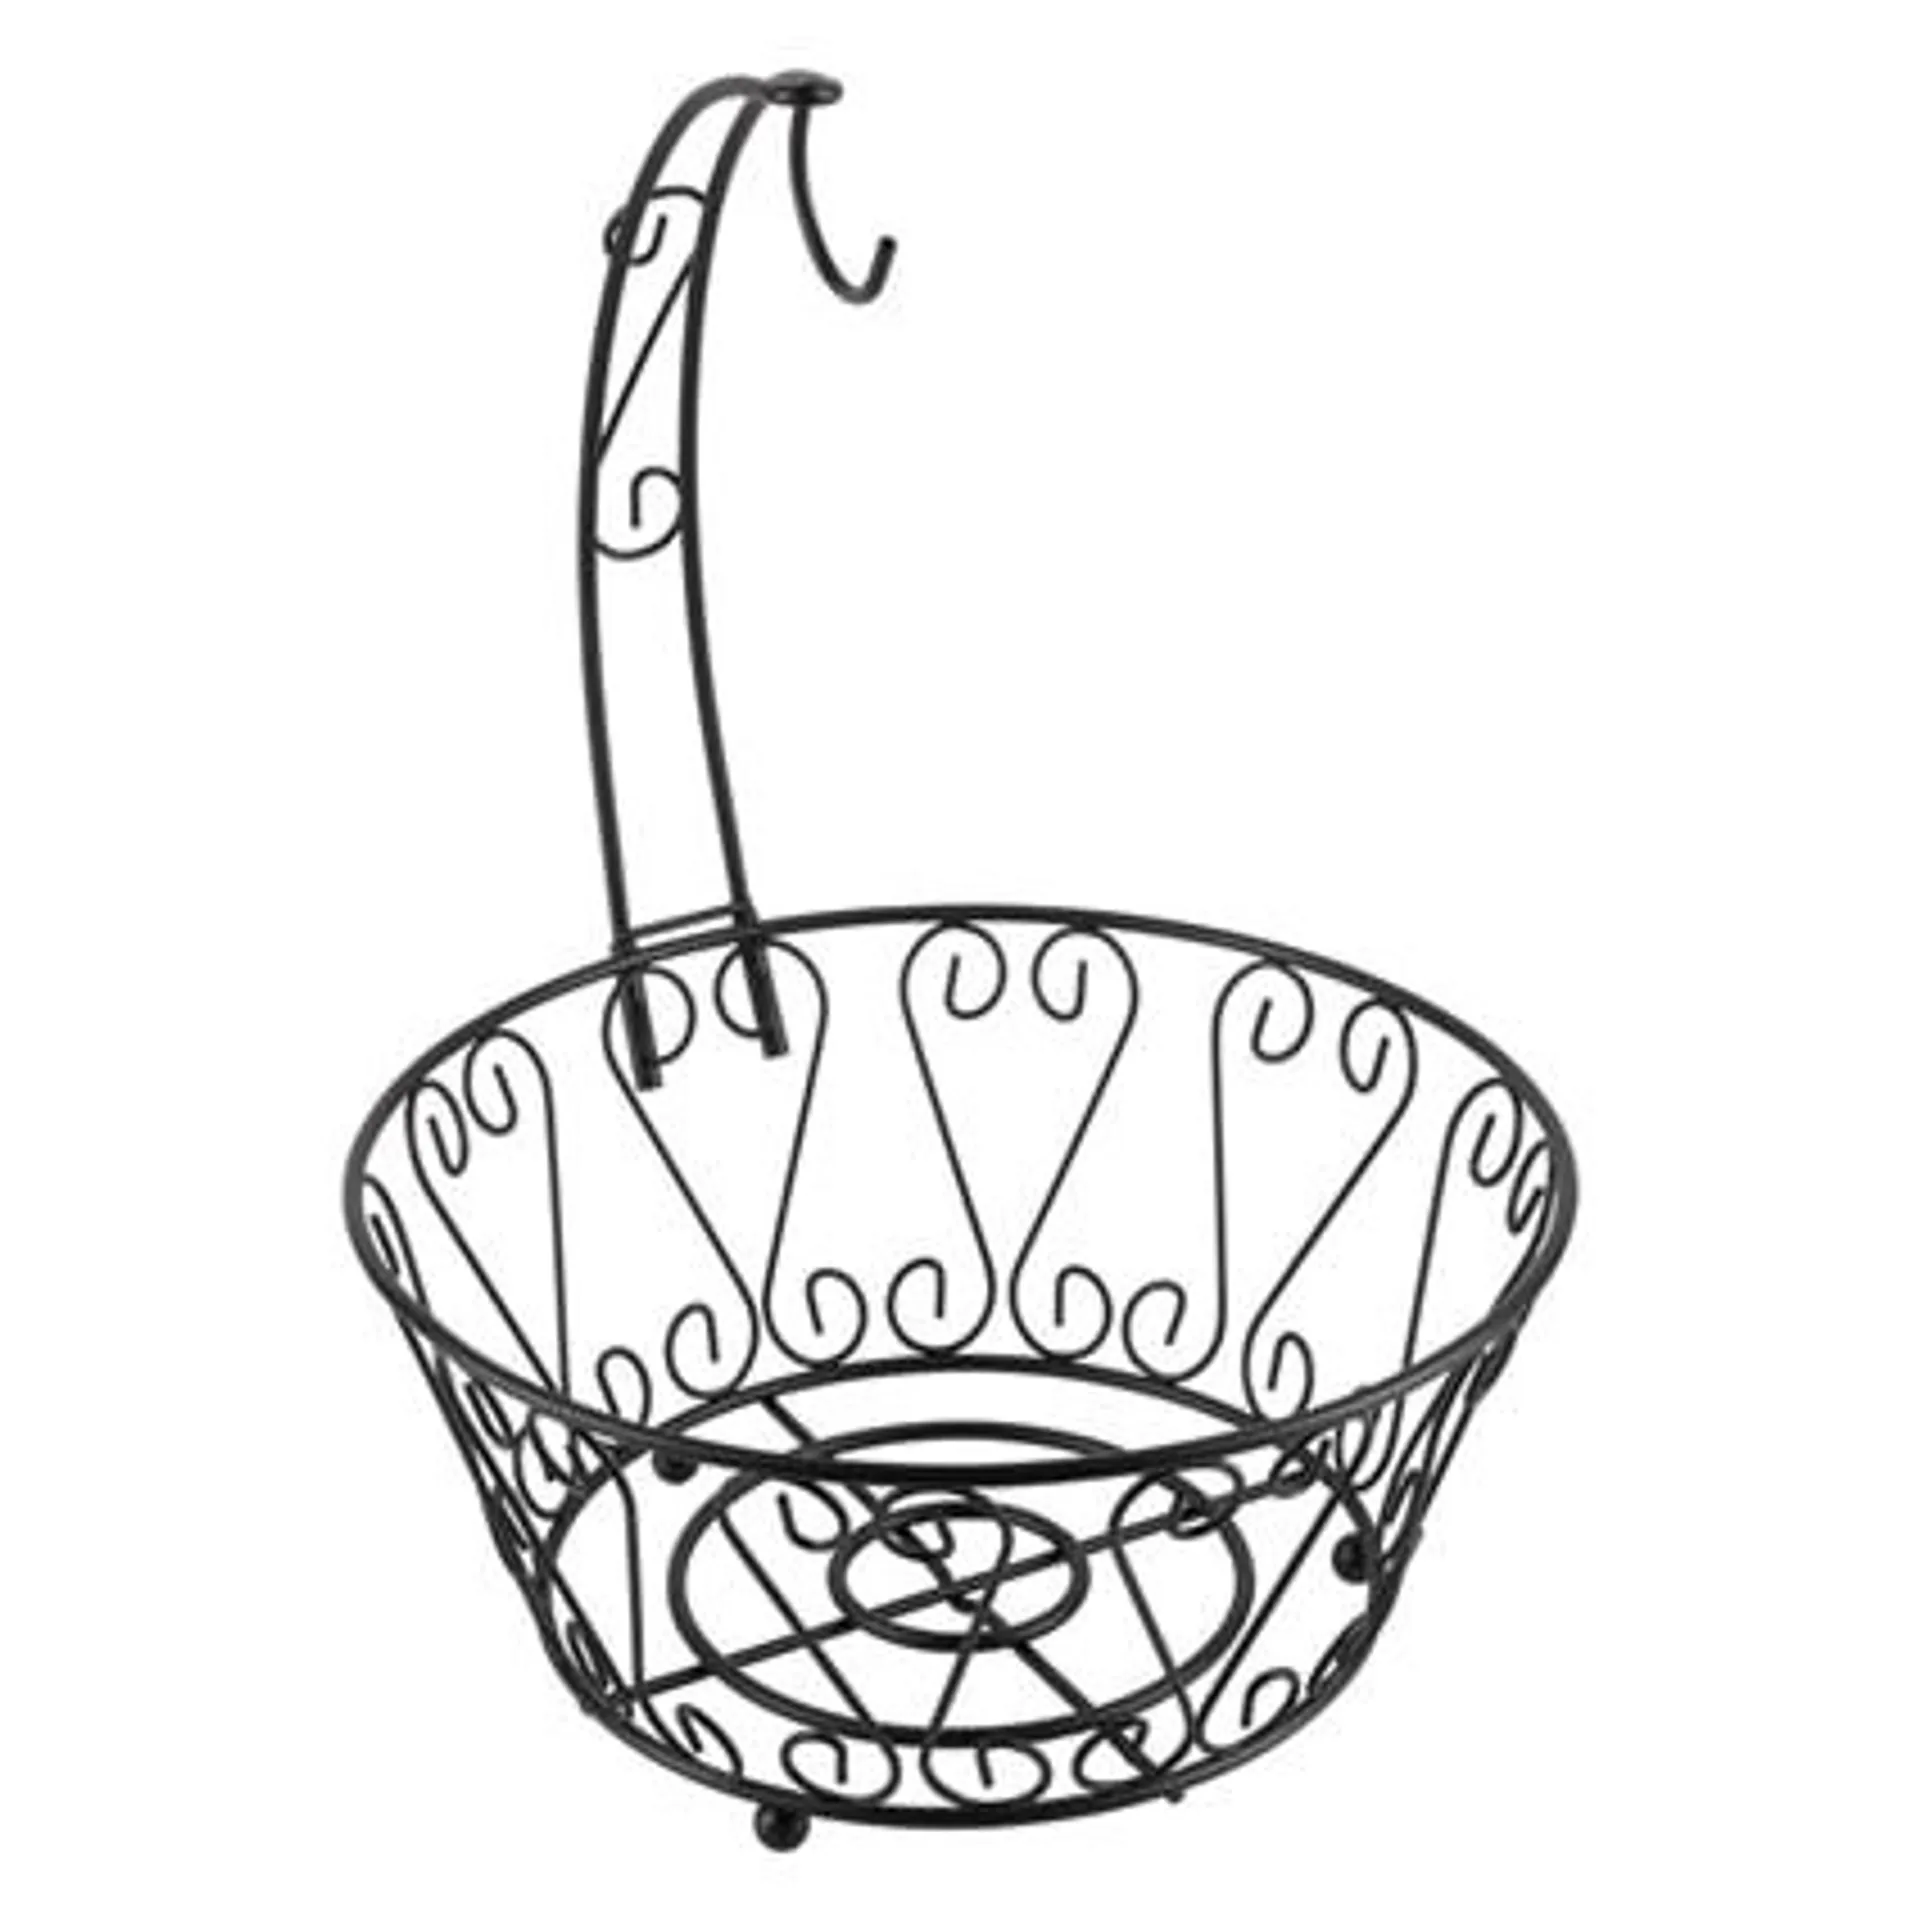 Fruit Basket with Banana Hanger